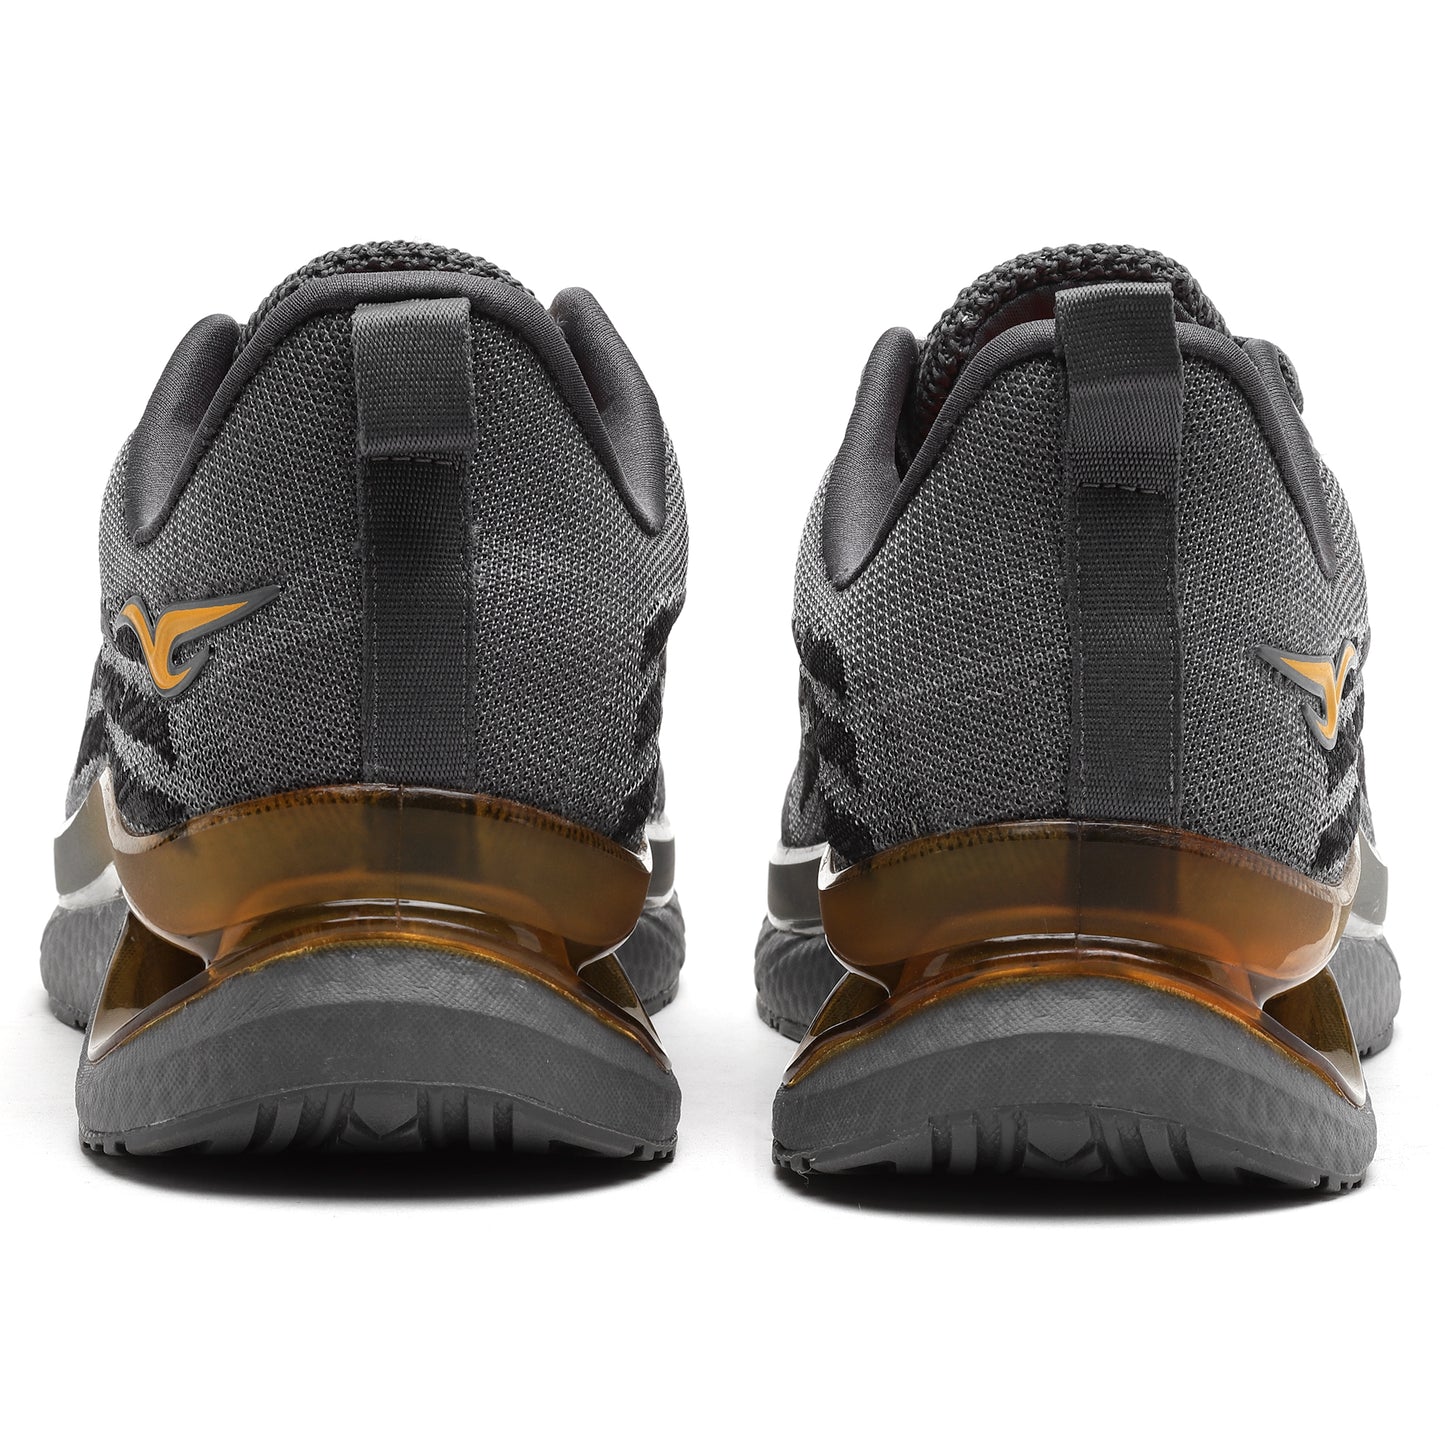 Vomax Sports Stalino-03 Men's Walking, Road Running Sports Shoes